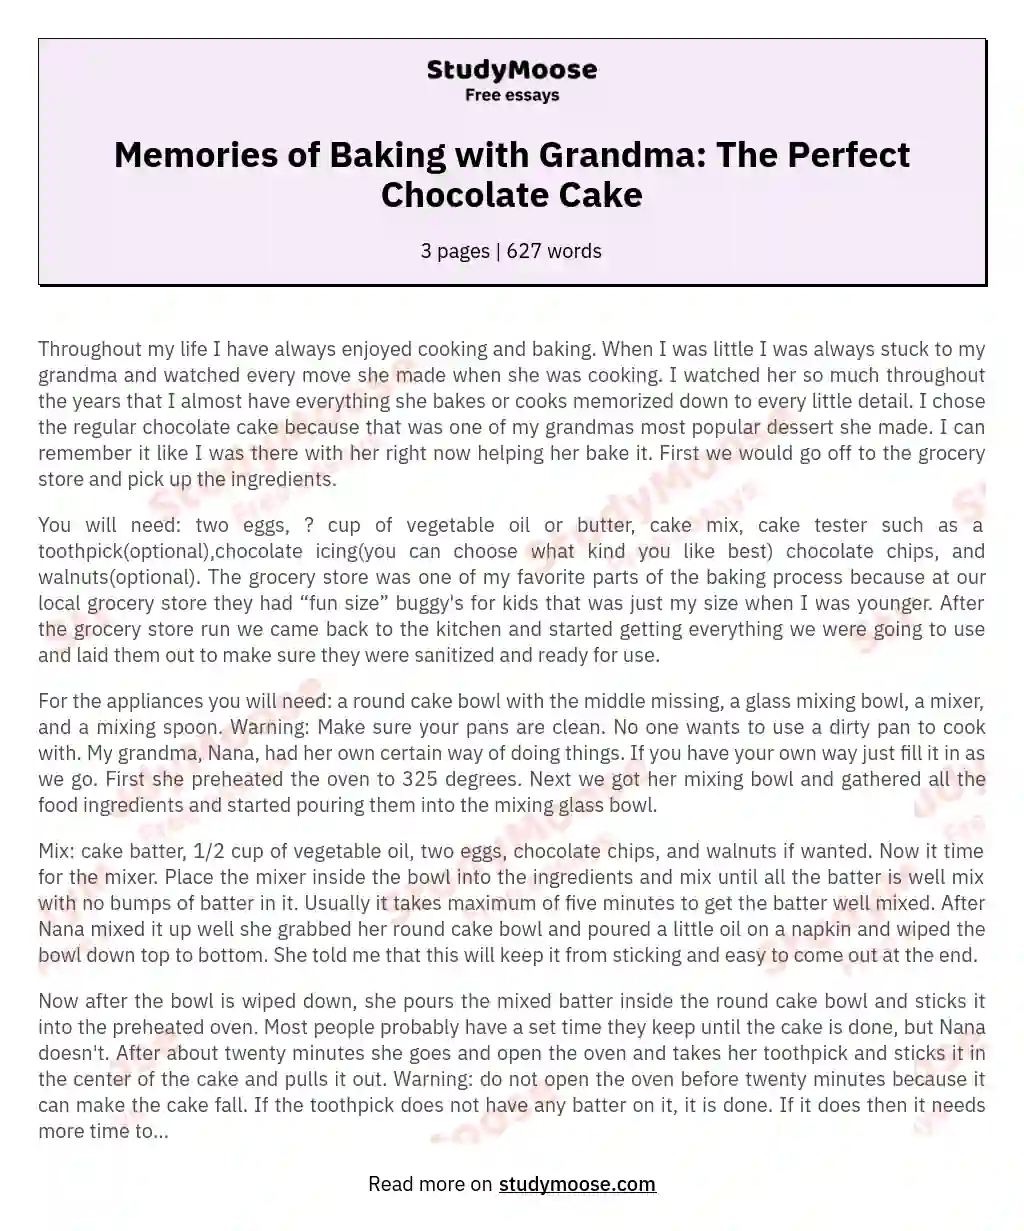 Memories of Baking with Grandma: The Perfect Chocolate Cake